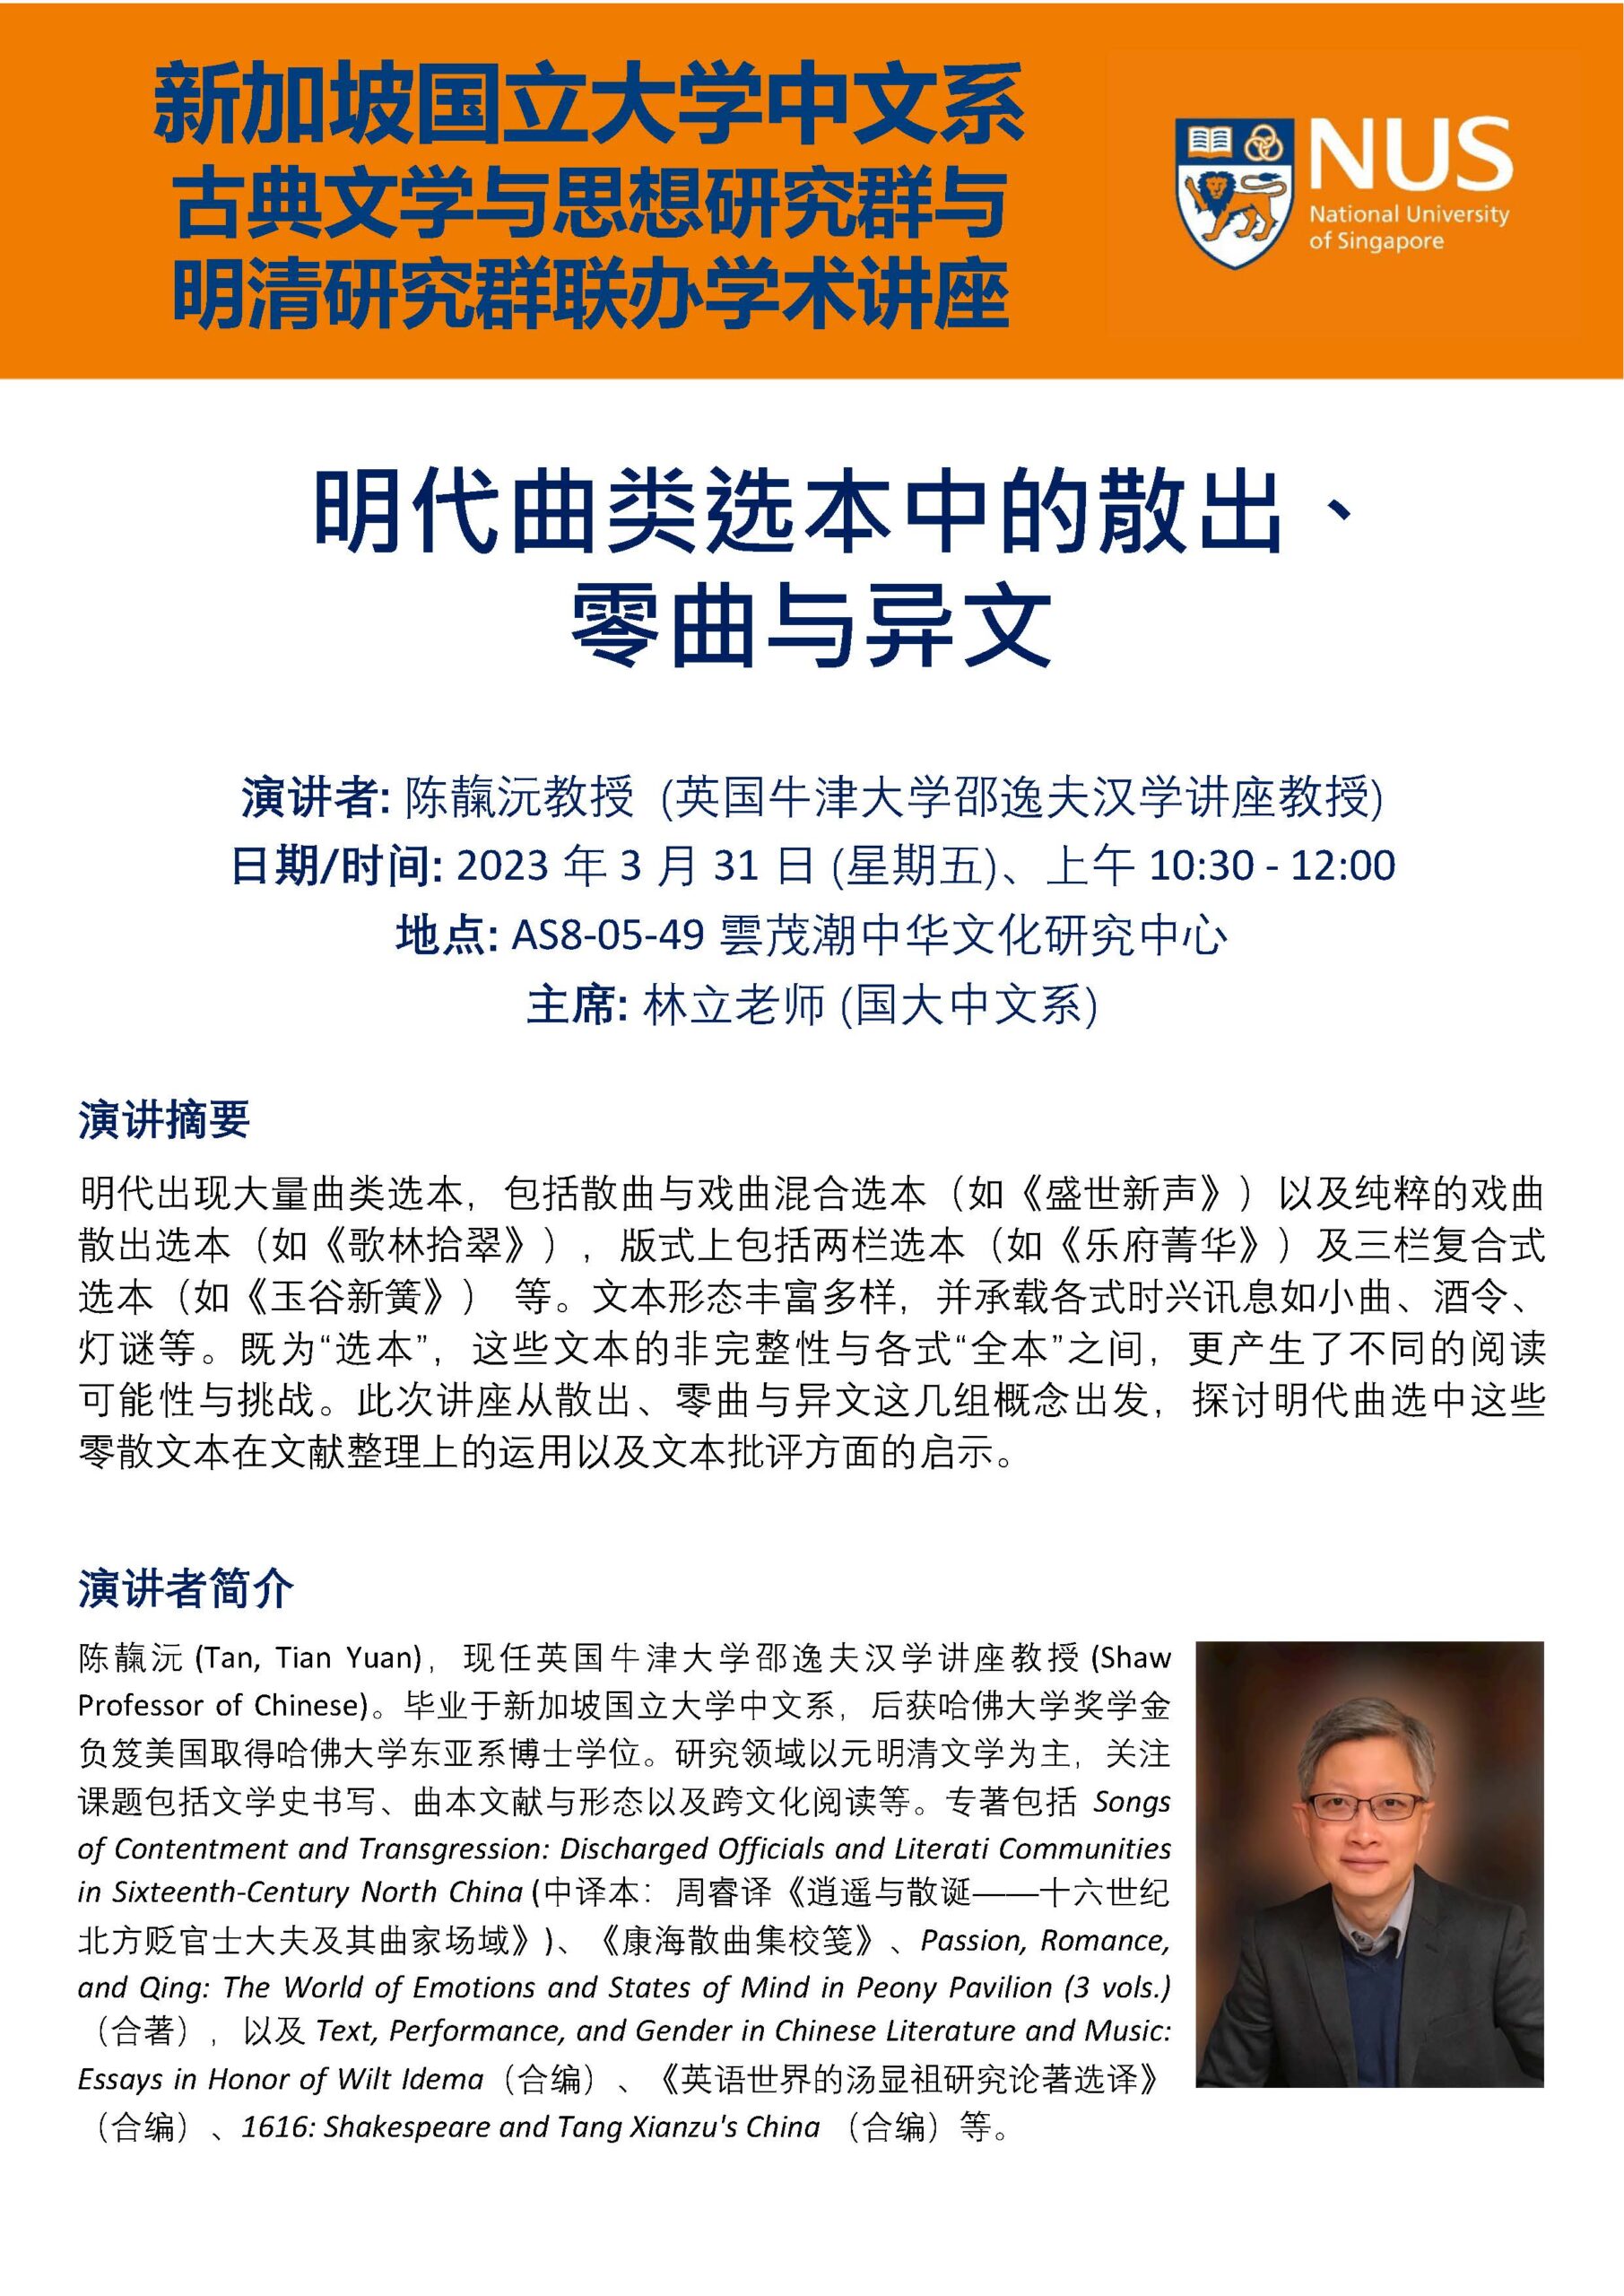 Tan Tian Yuan Seminar 31 March